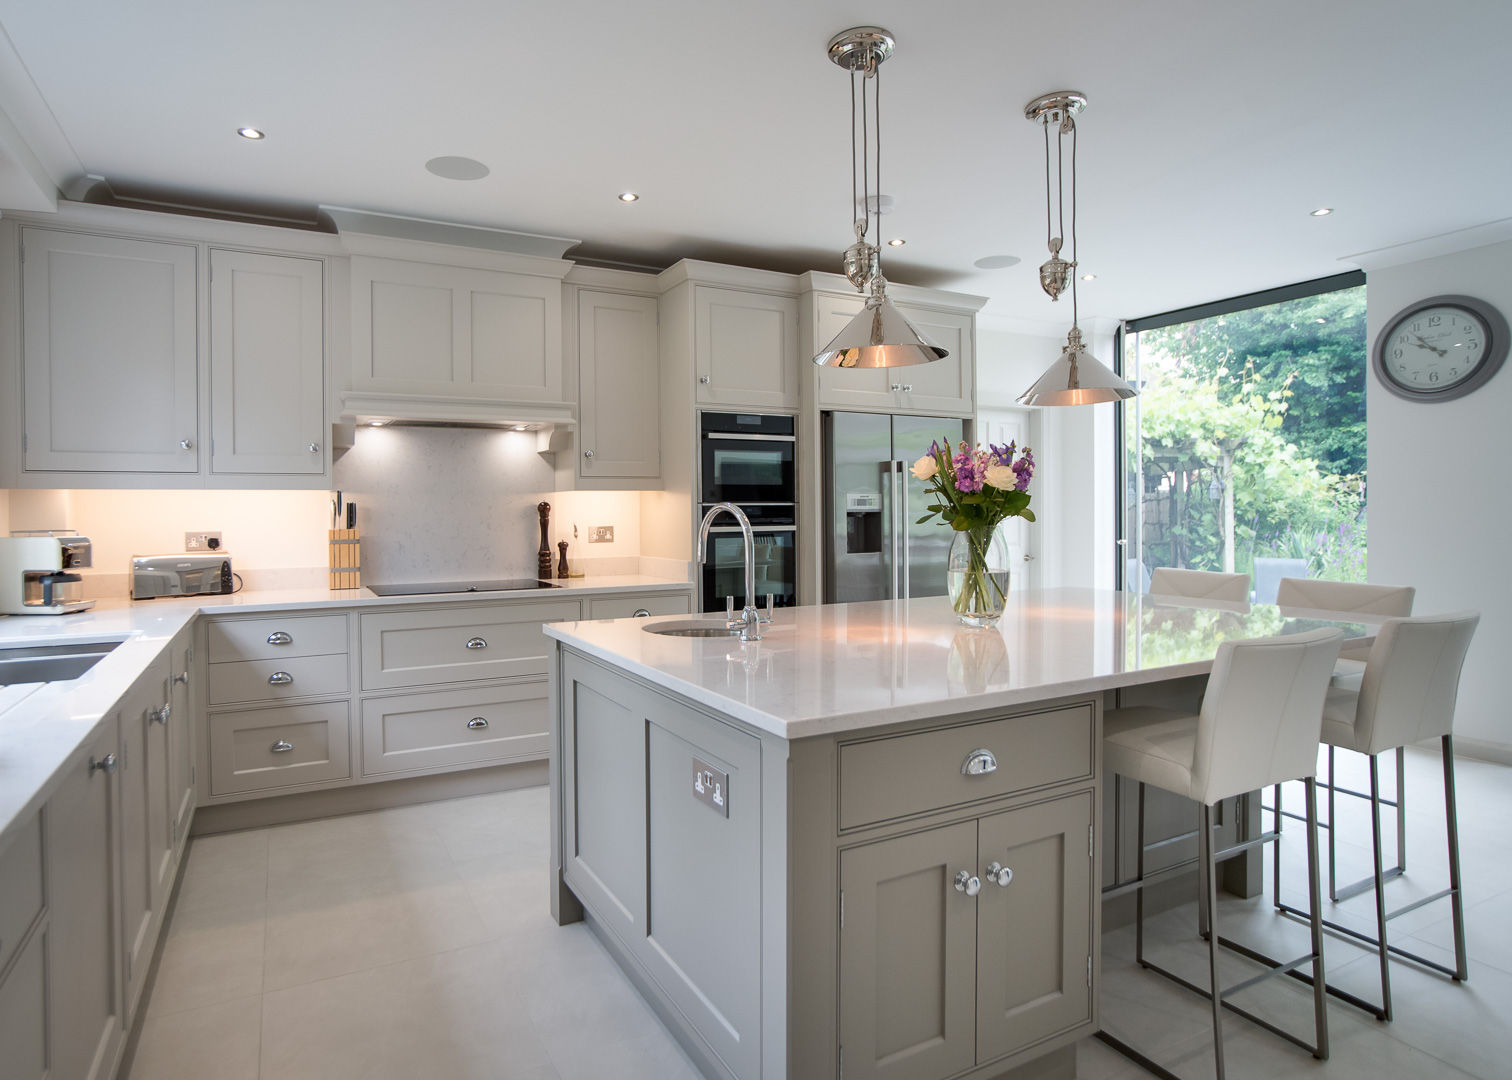 Luxurious, bespoke kitchen by John Ladbury John Ladbury and Company Cocinas a medida white,modern,minimalist,quartz